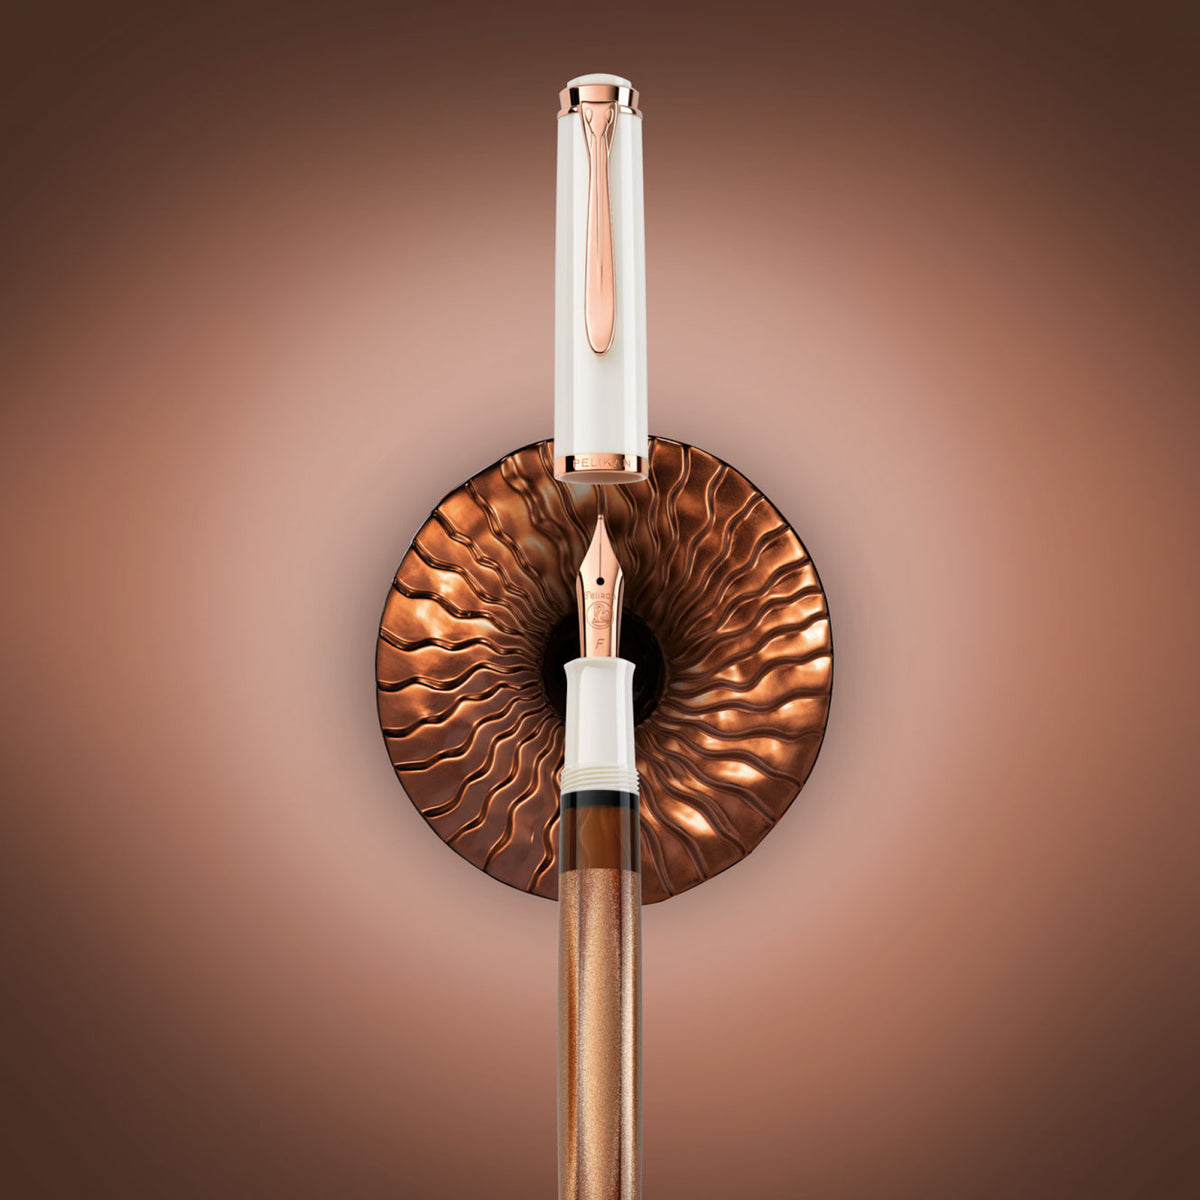 Pelikan - Fountain Pen - Classic M200 - Copper Rose Gold